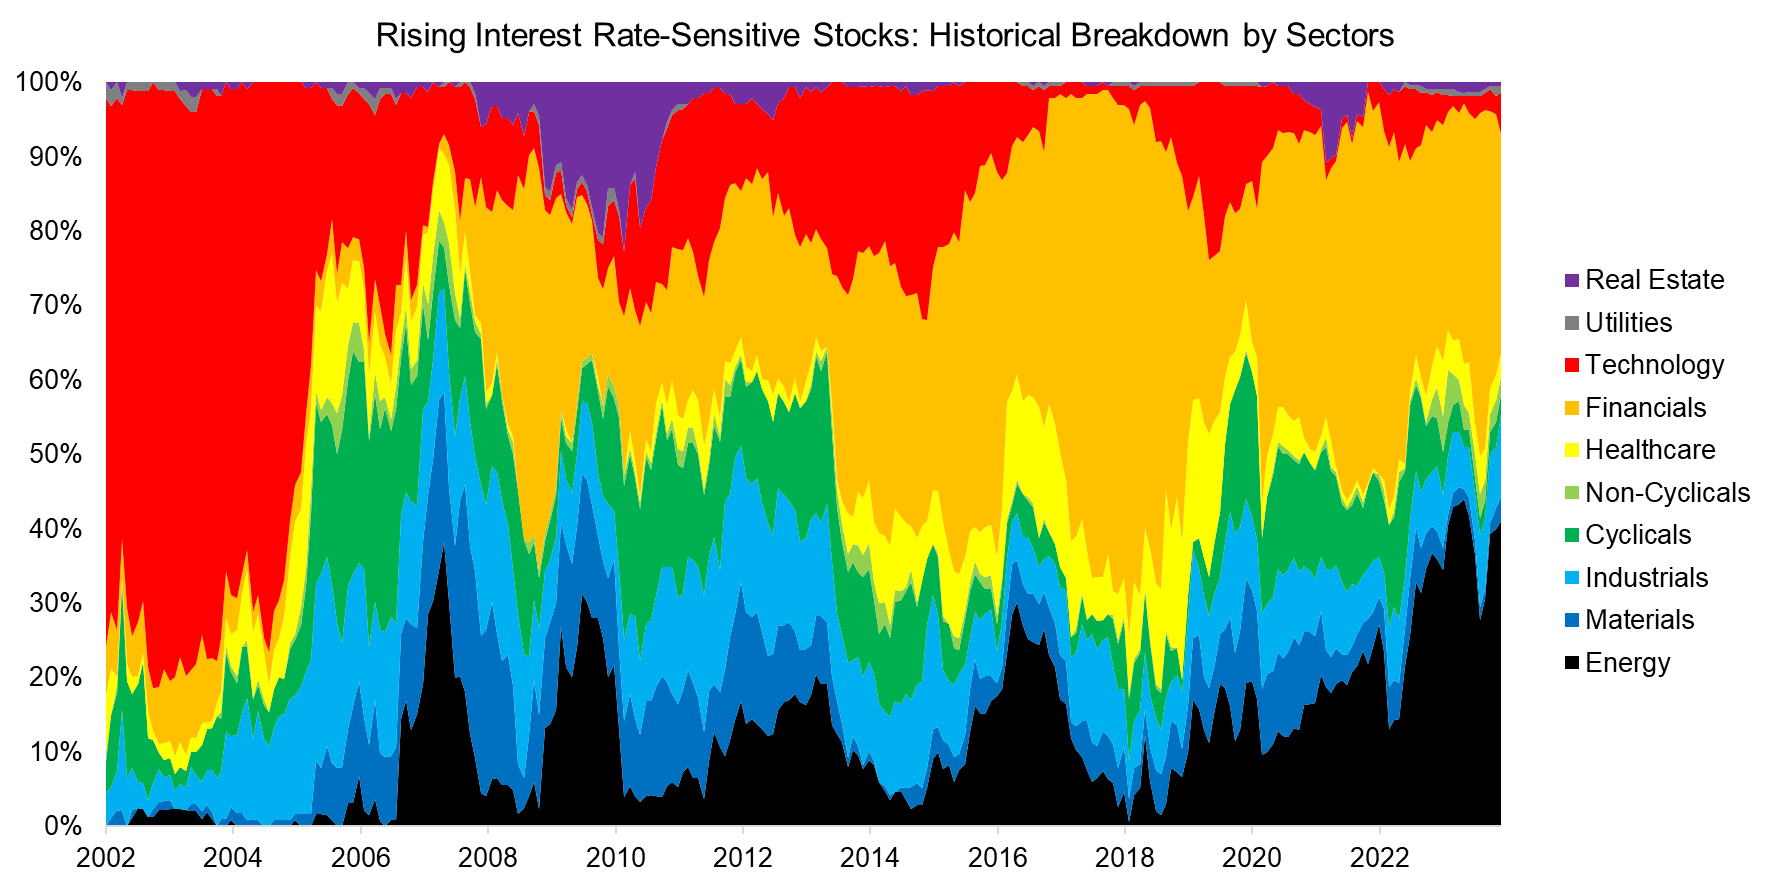 Rising Interest Rate-Sensitive Stocks Historical Breakdown by Sectors